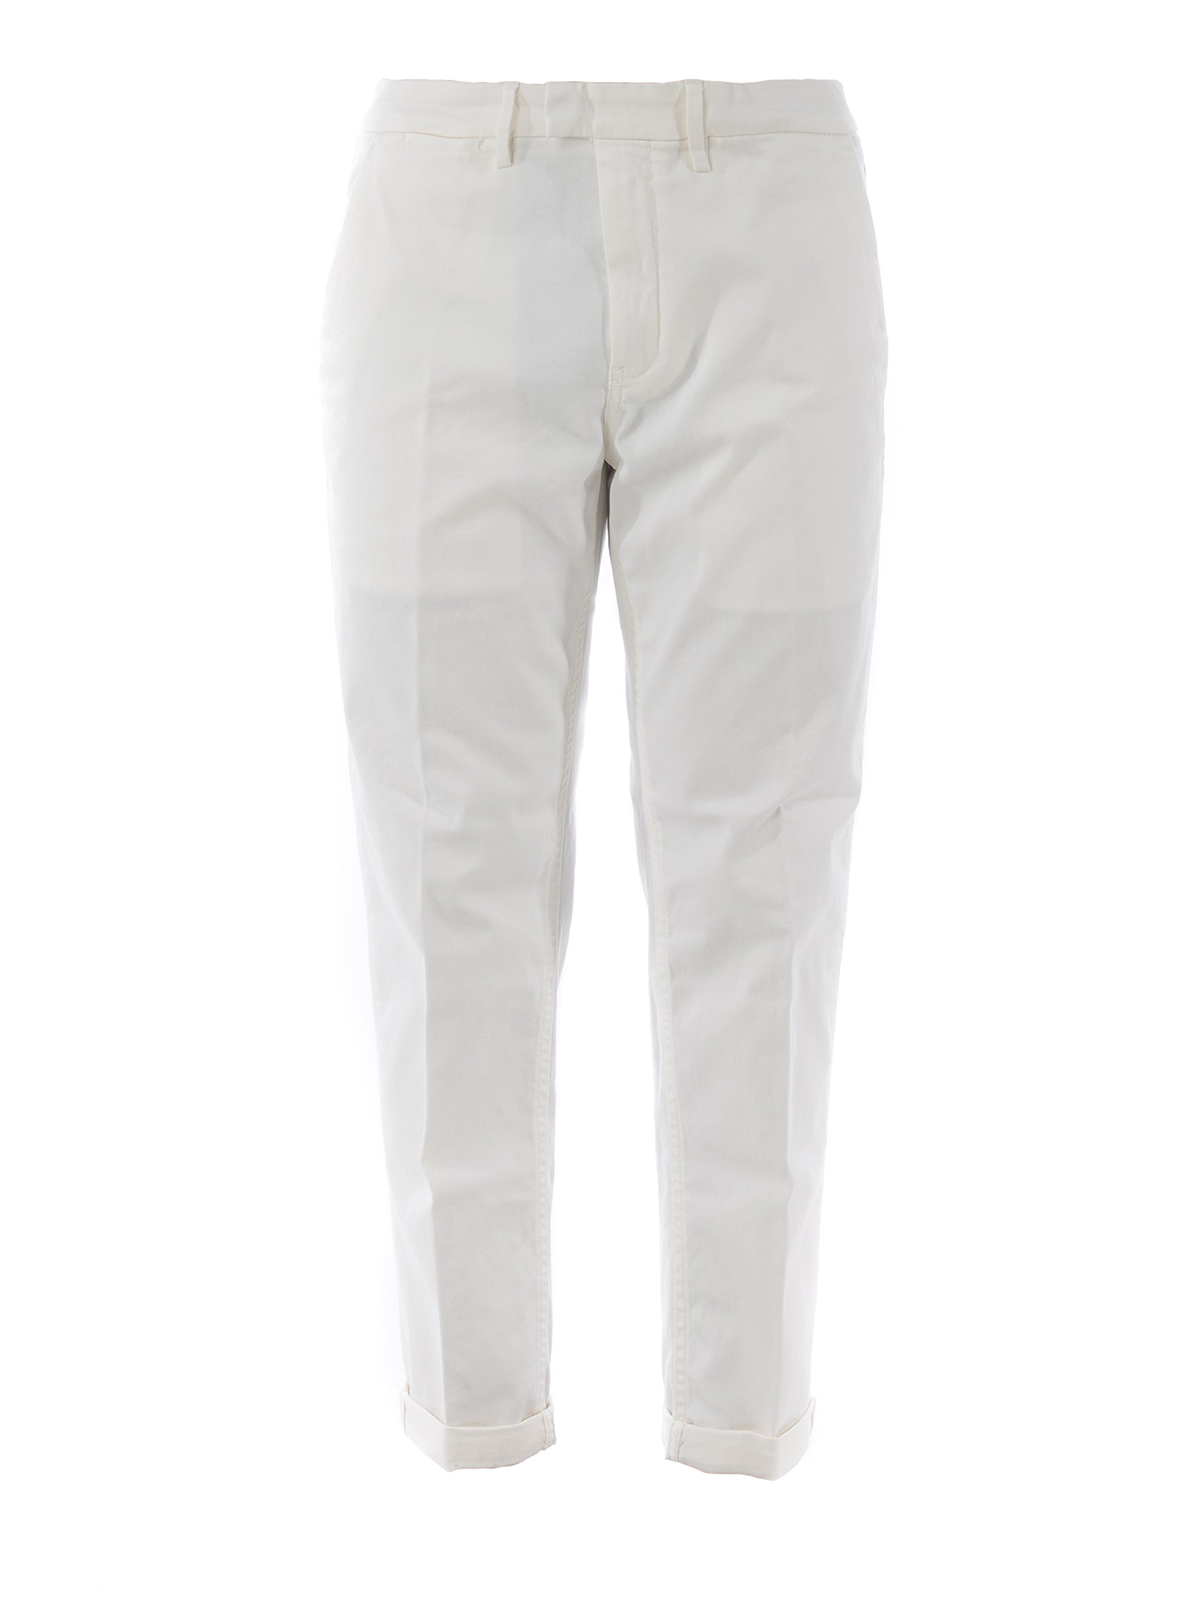 Buy Brown Trousers  Pants for Women by Vero Moda Online  Ajiocom